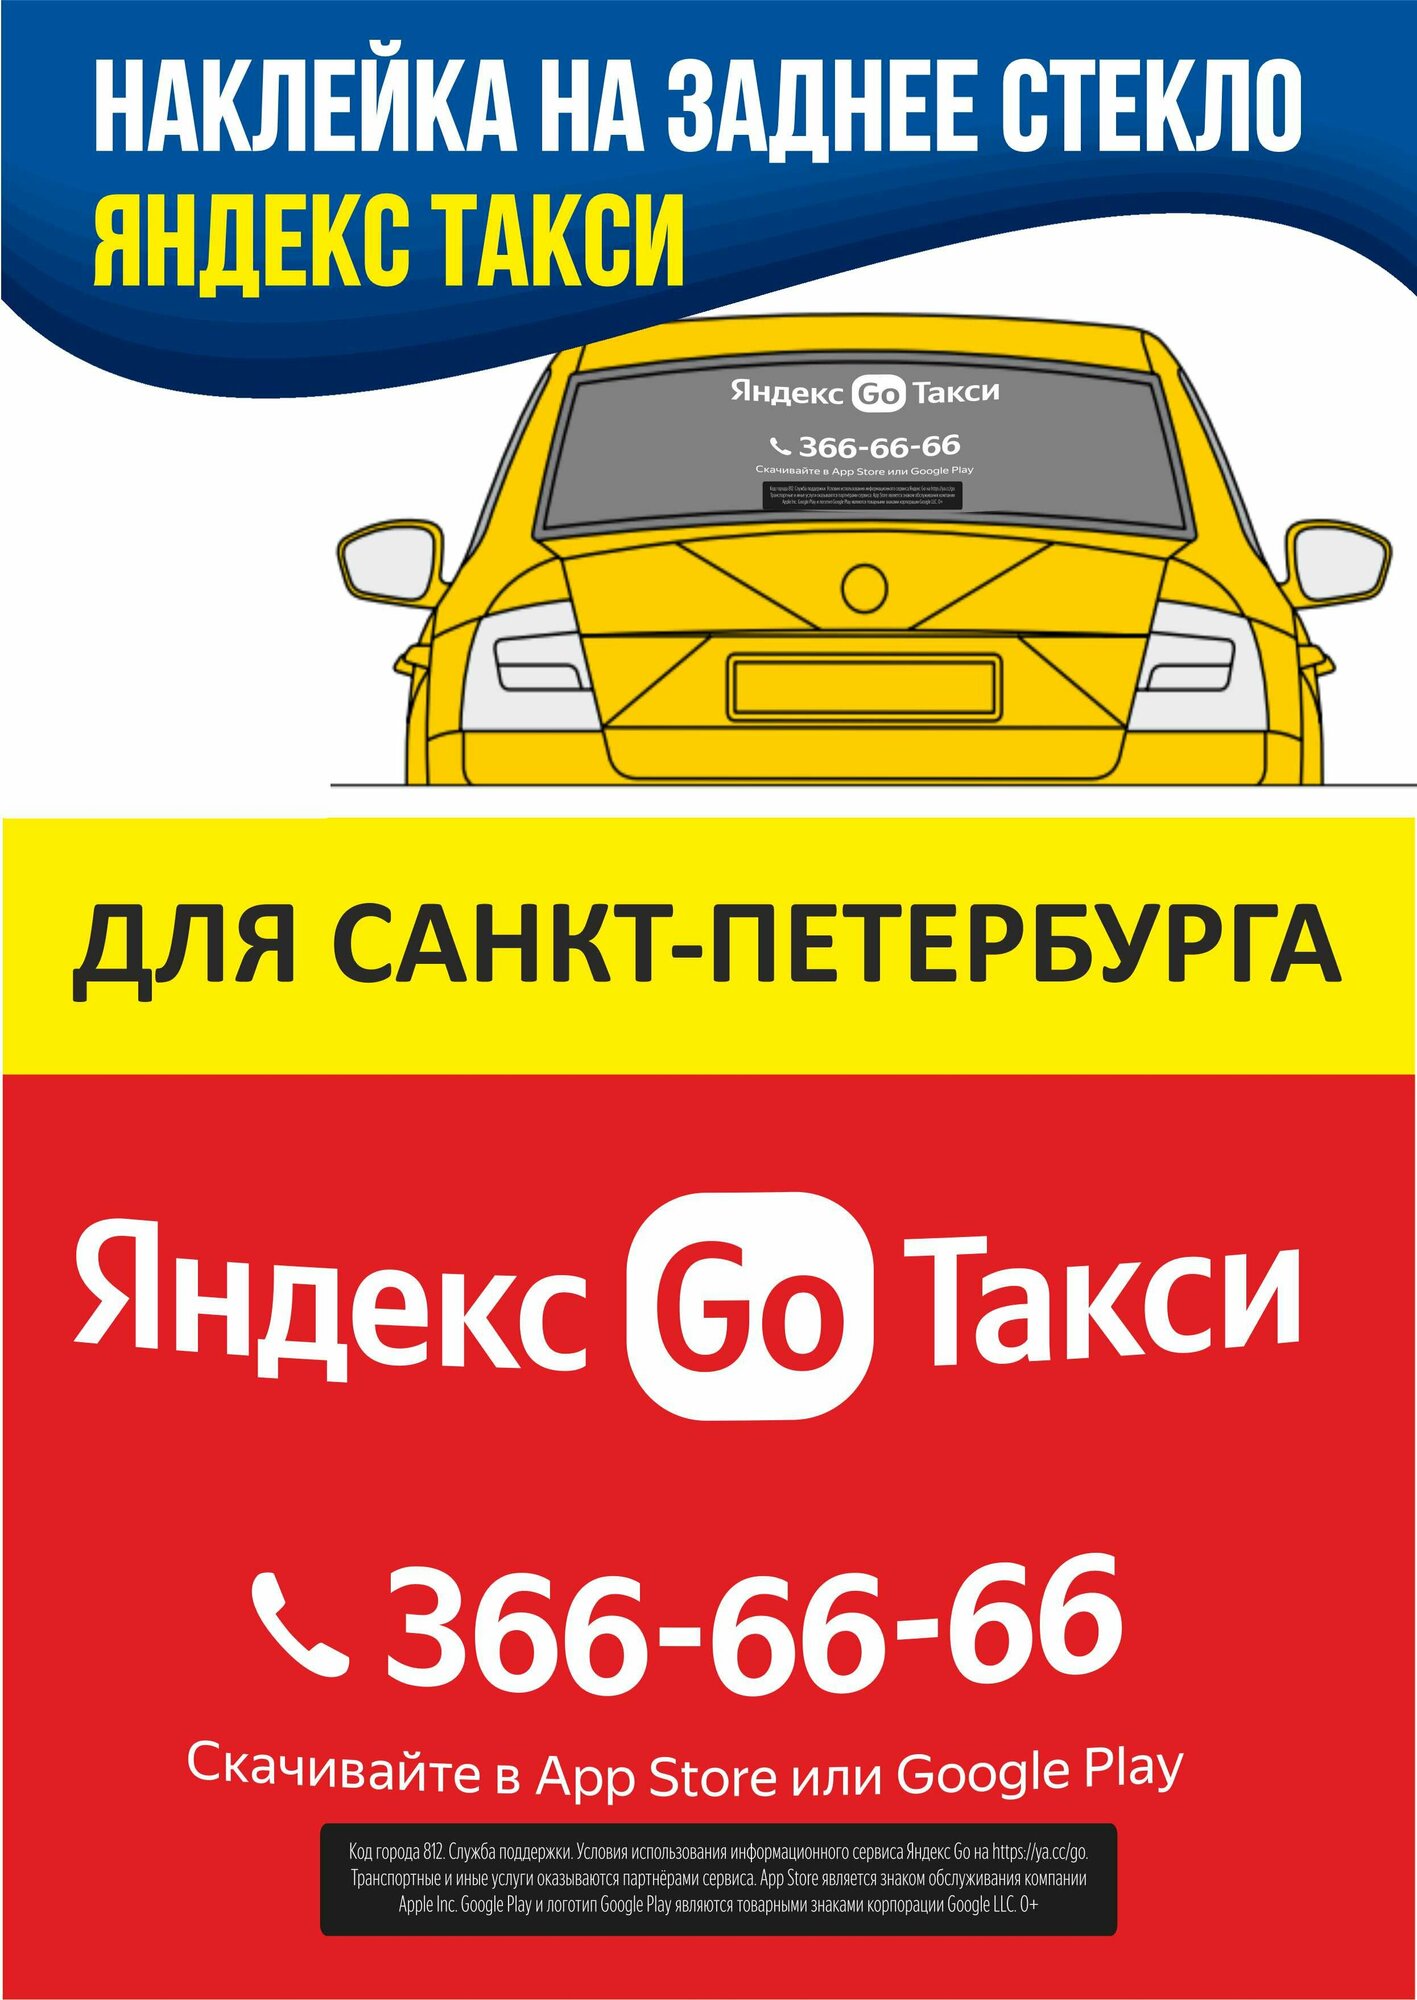 Яндекс Такси для Питера - наклейка с номером на заднее стекло